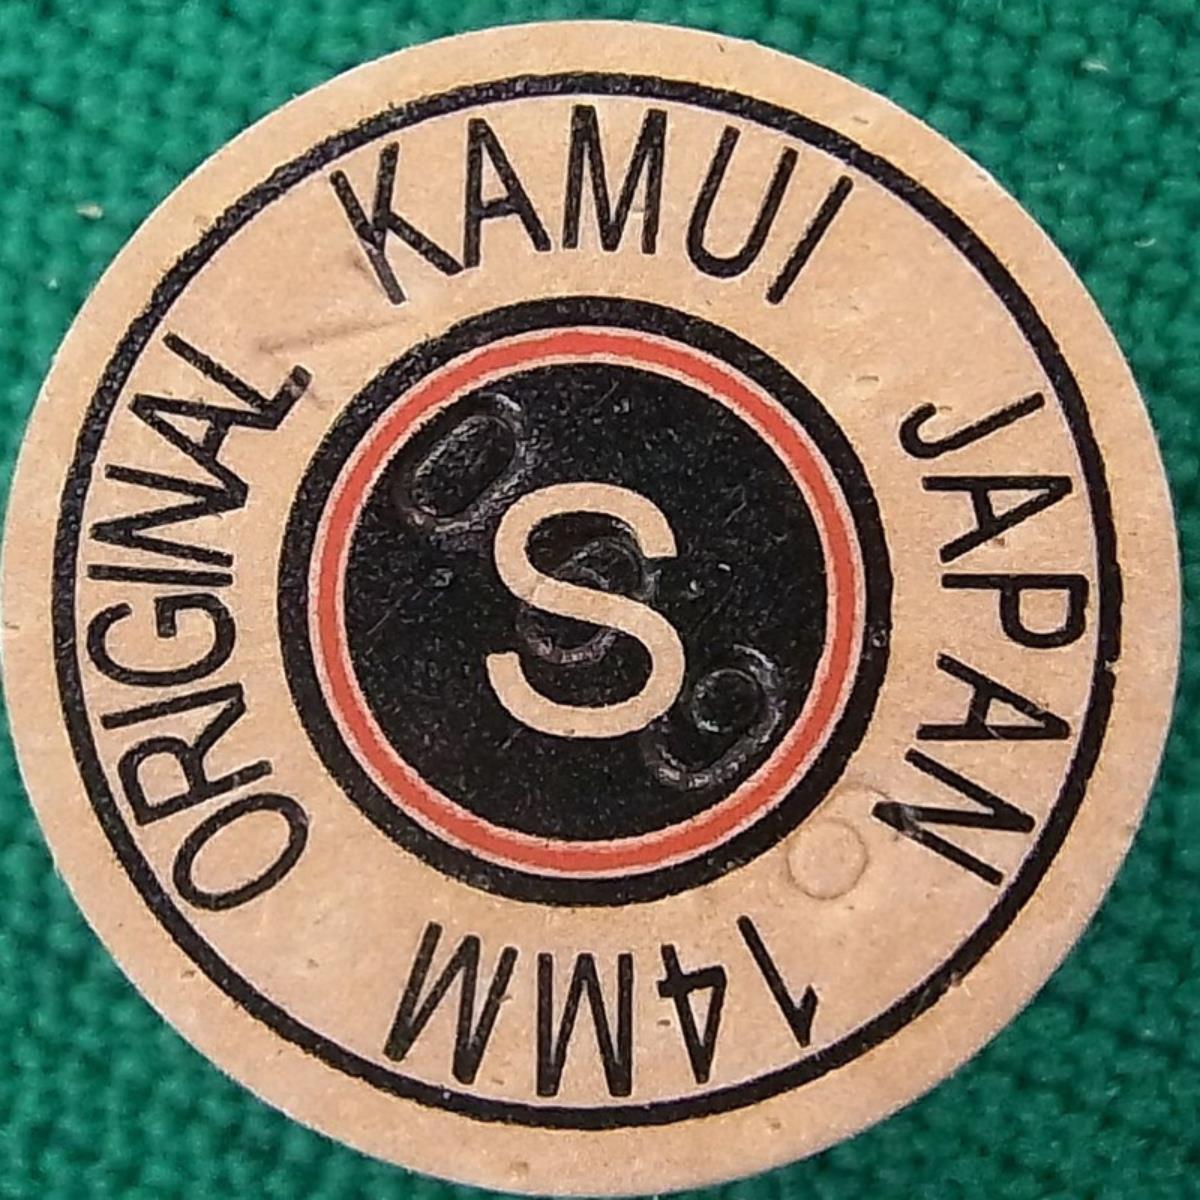 Kamui Original Soft